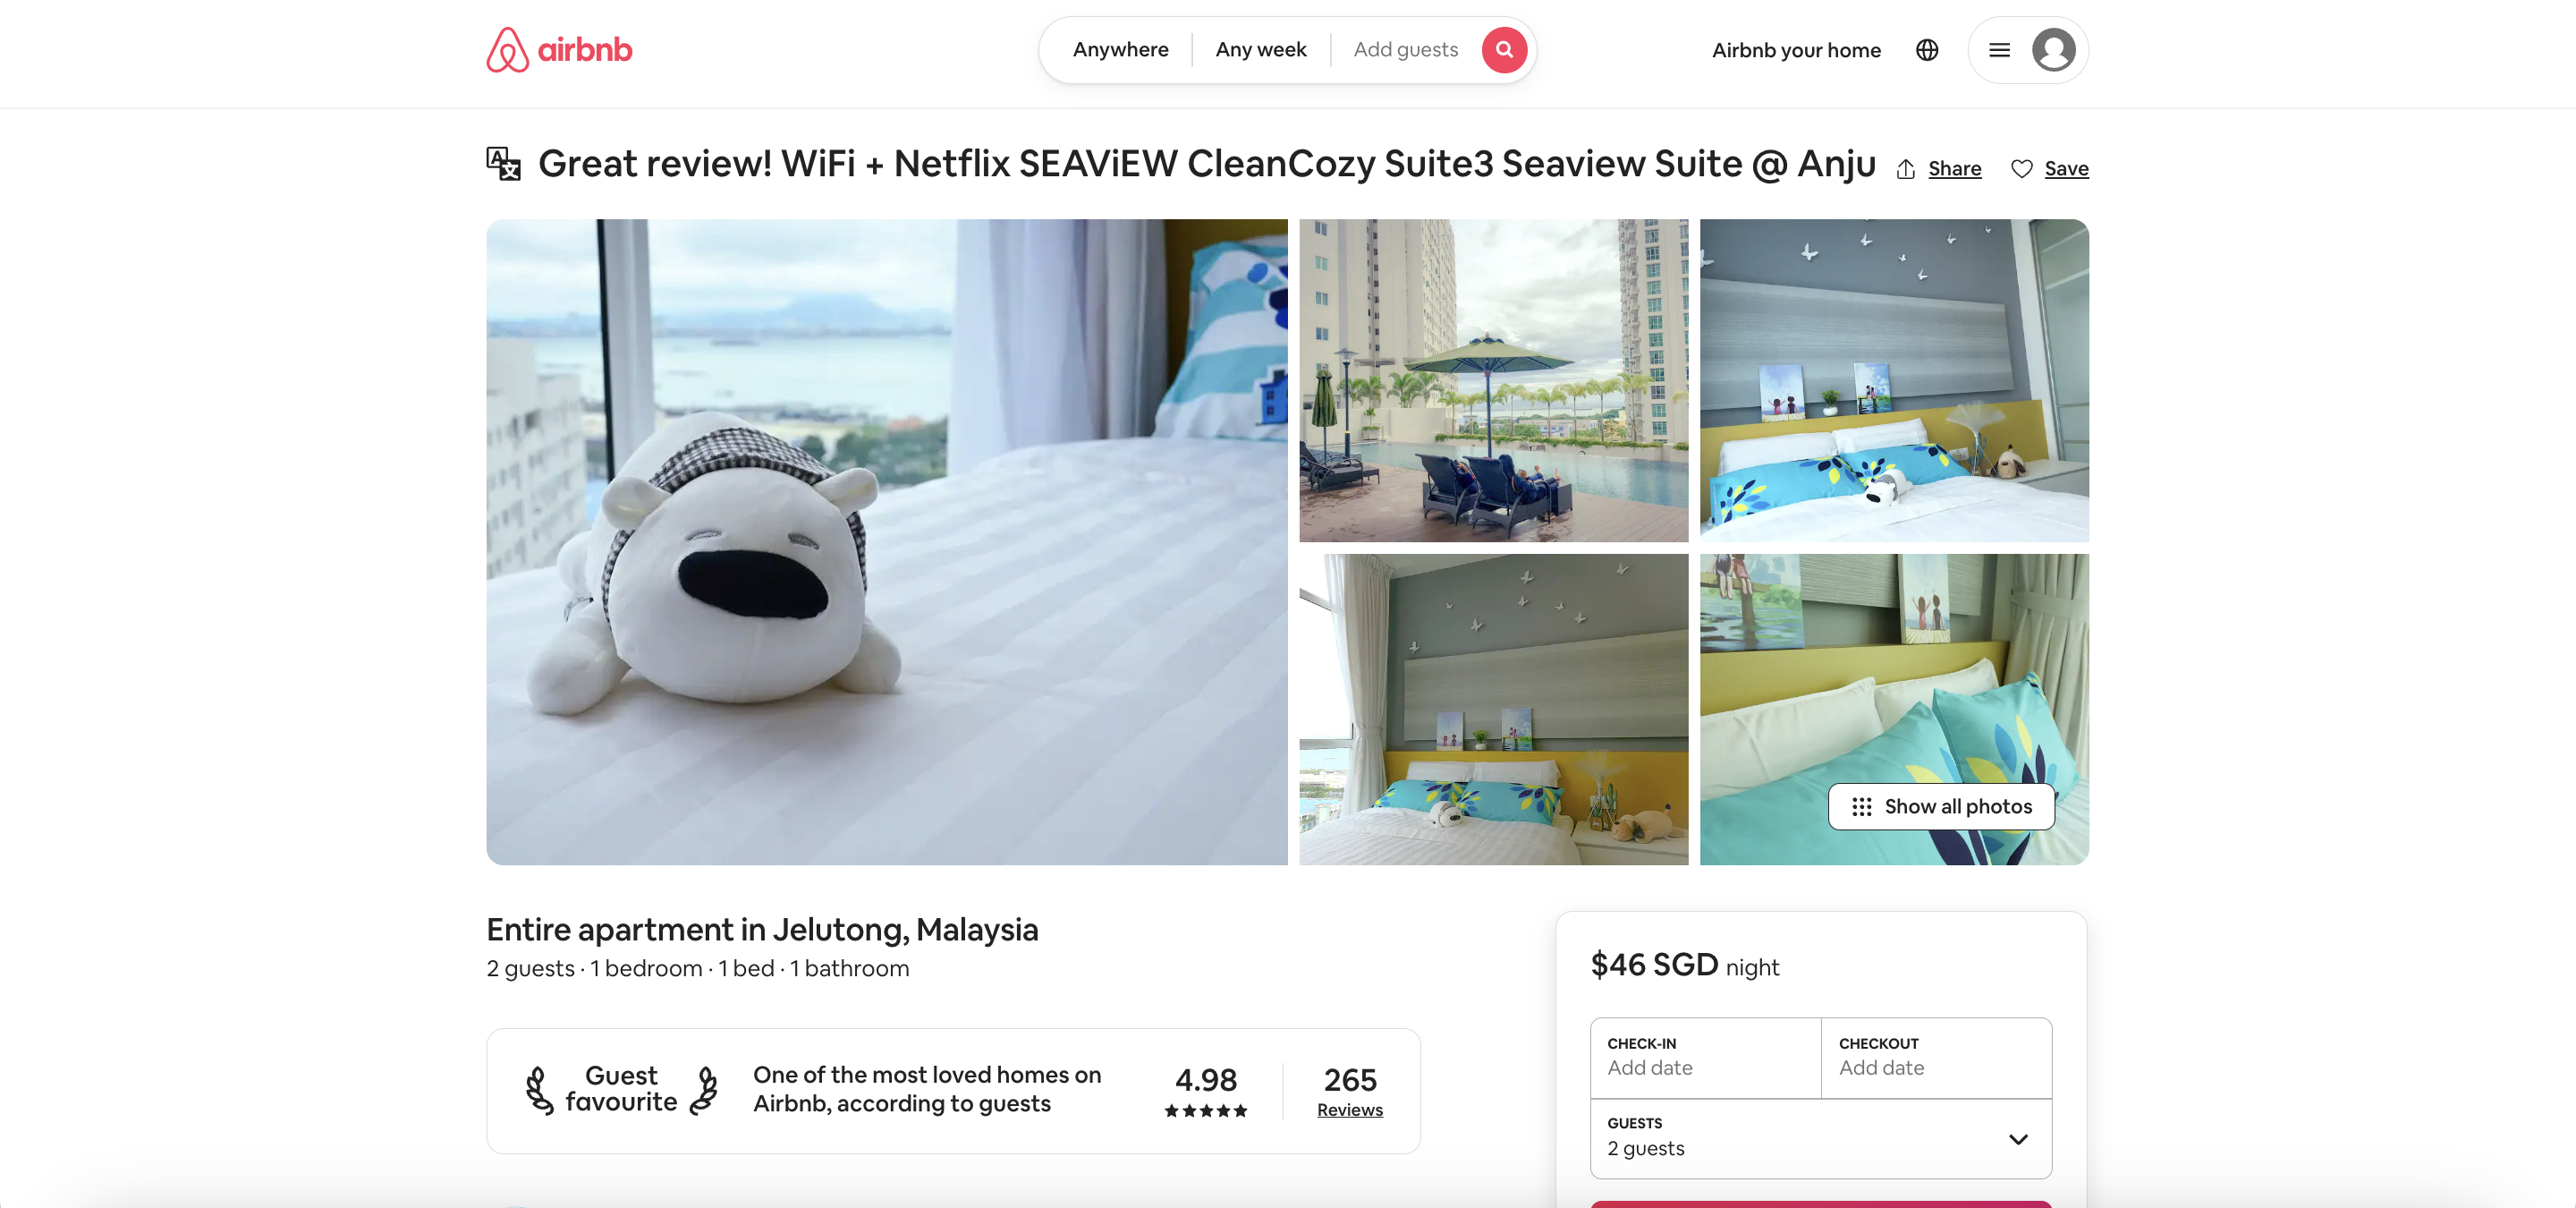 WiFi + Netflix SEAViEW CleanCozy Suite3 Seaview Suite